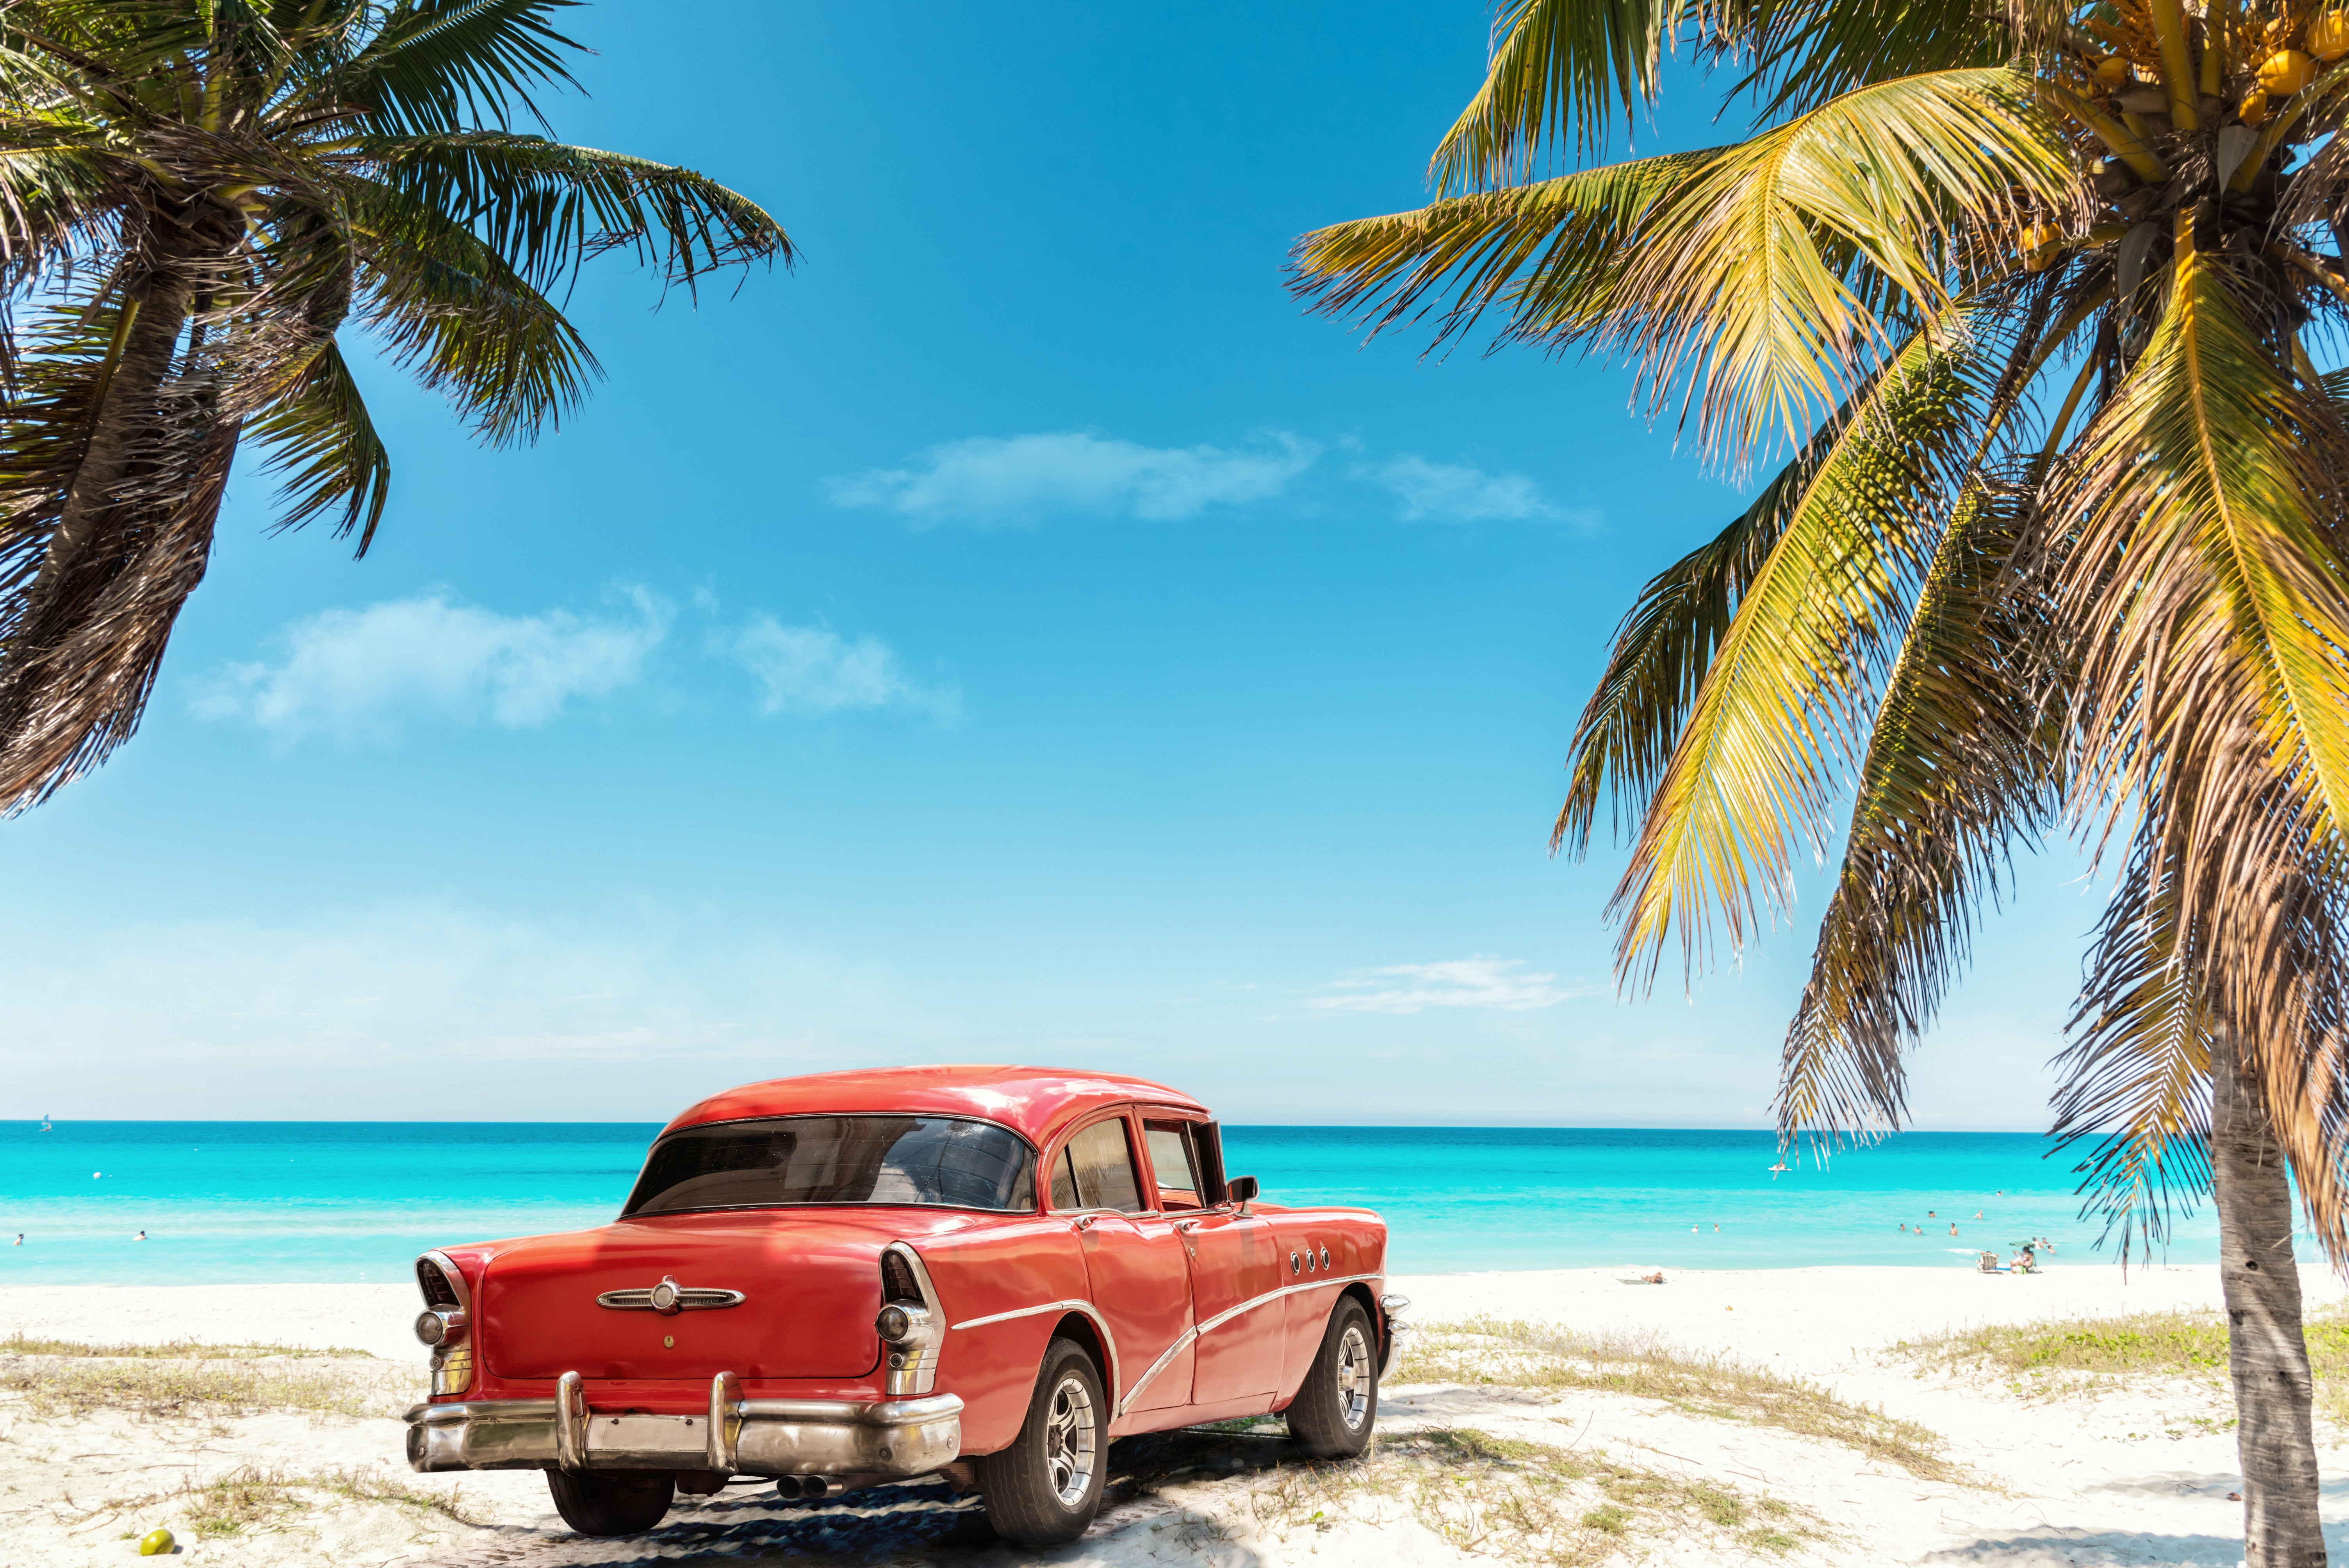 Embrace the traditional spirit of Cuba on Varadero Beach